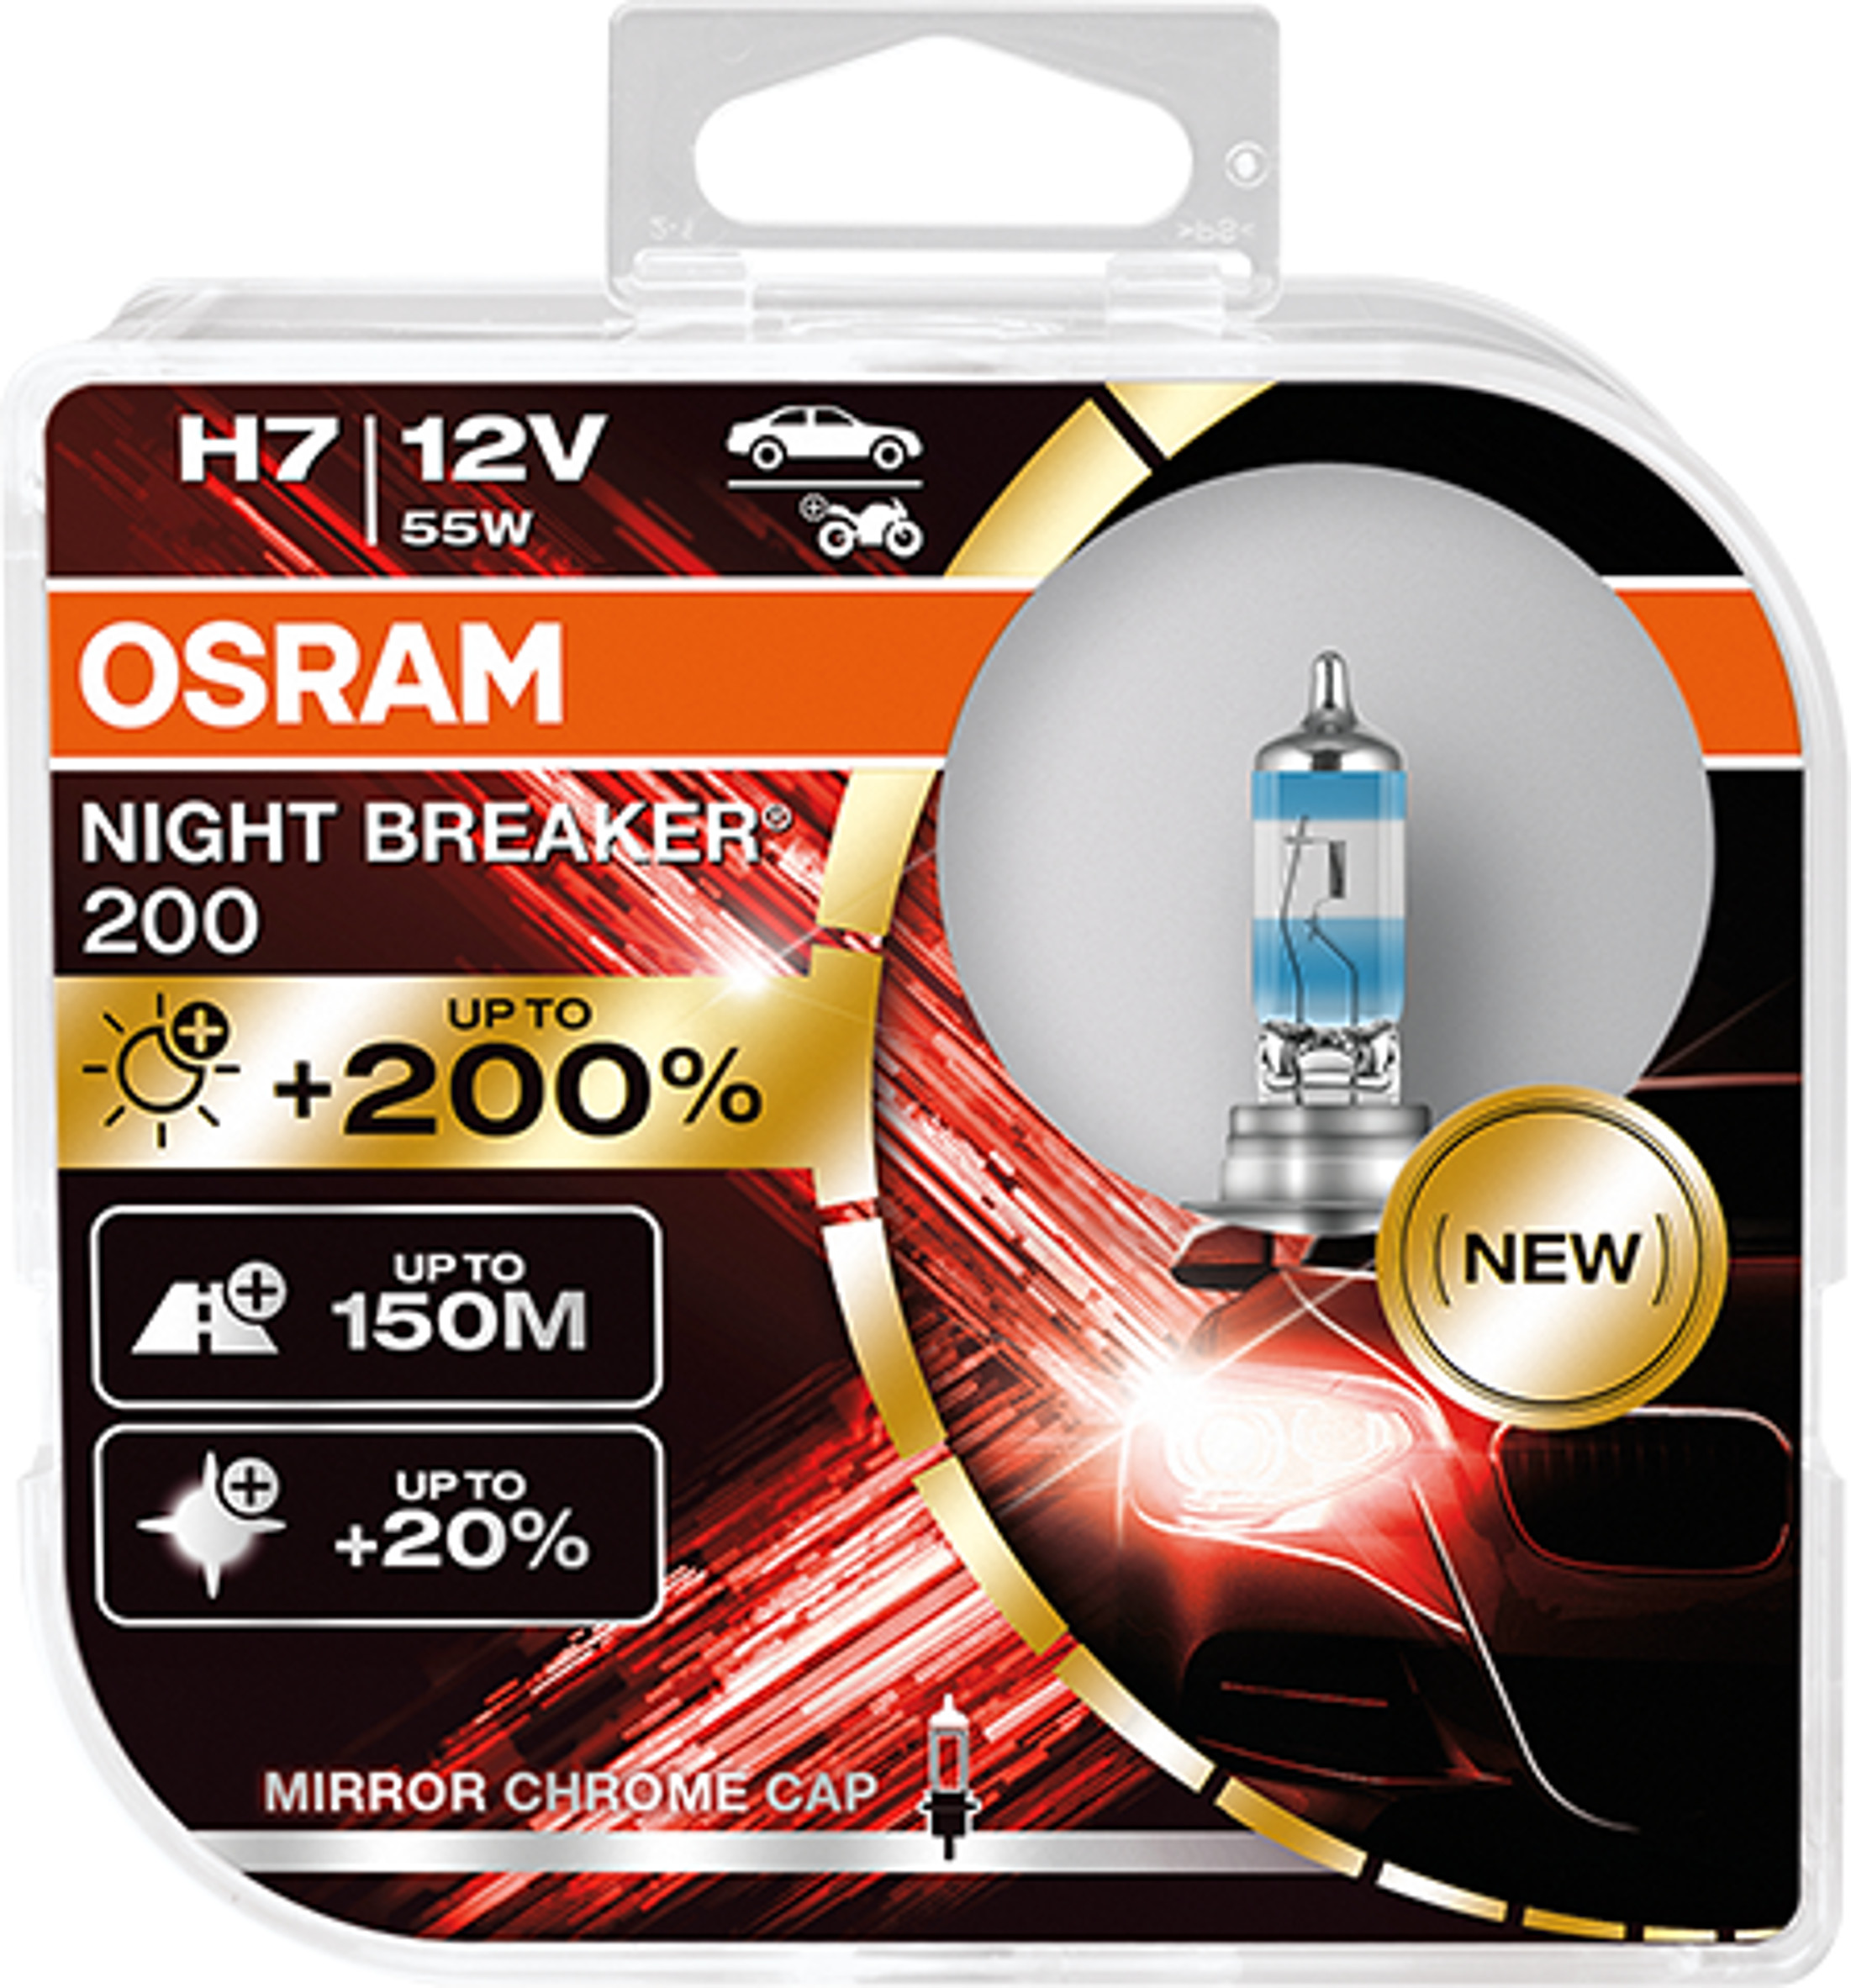 Osram NIGHT BREAKER 200 H4 H7 H11 up to 200% more light 2pcs Free Choice